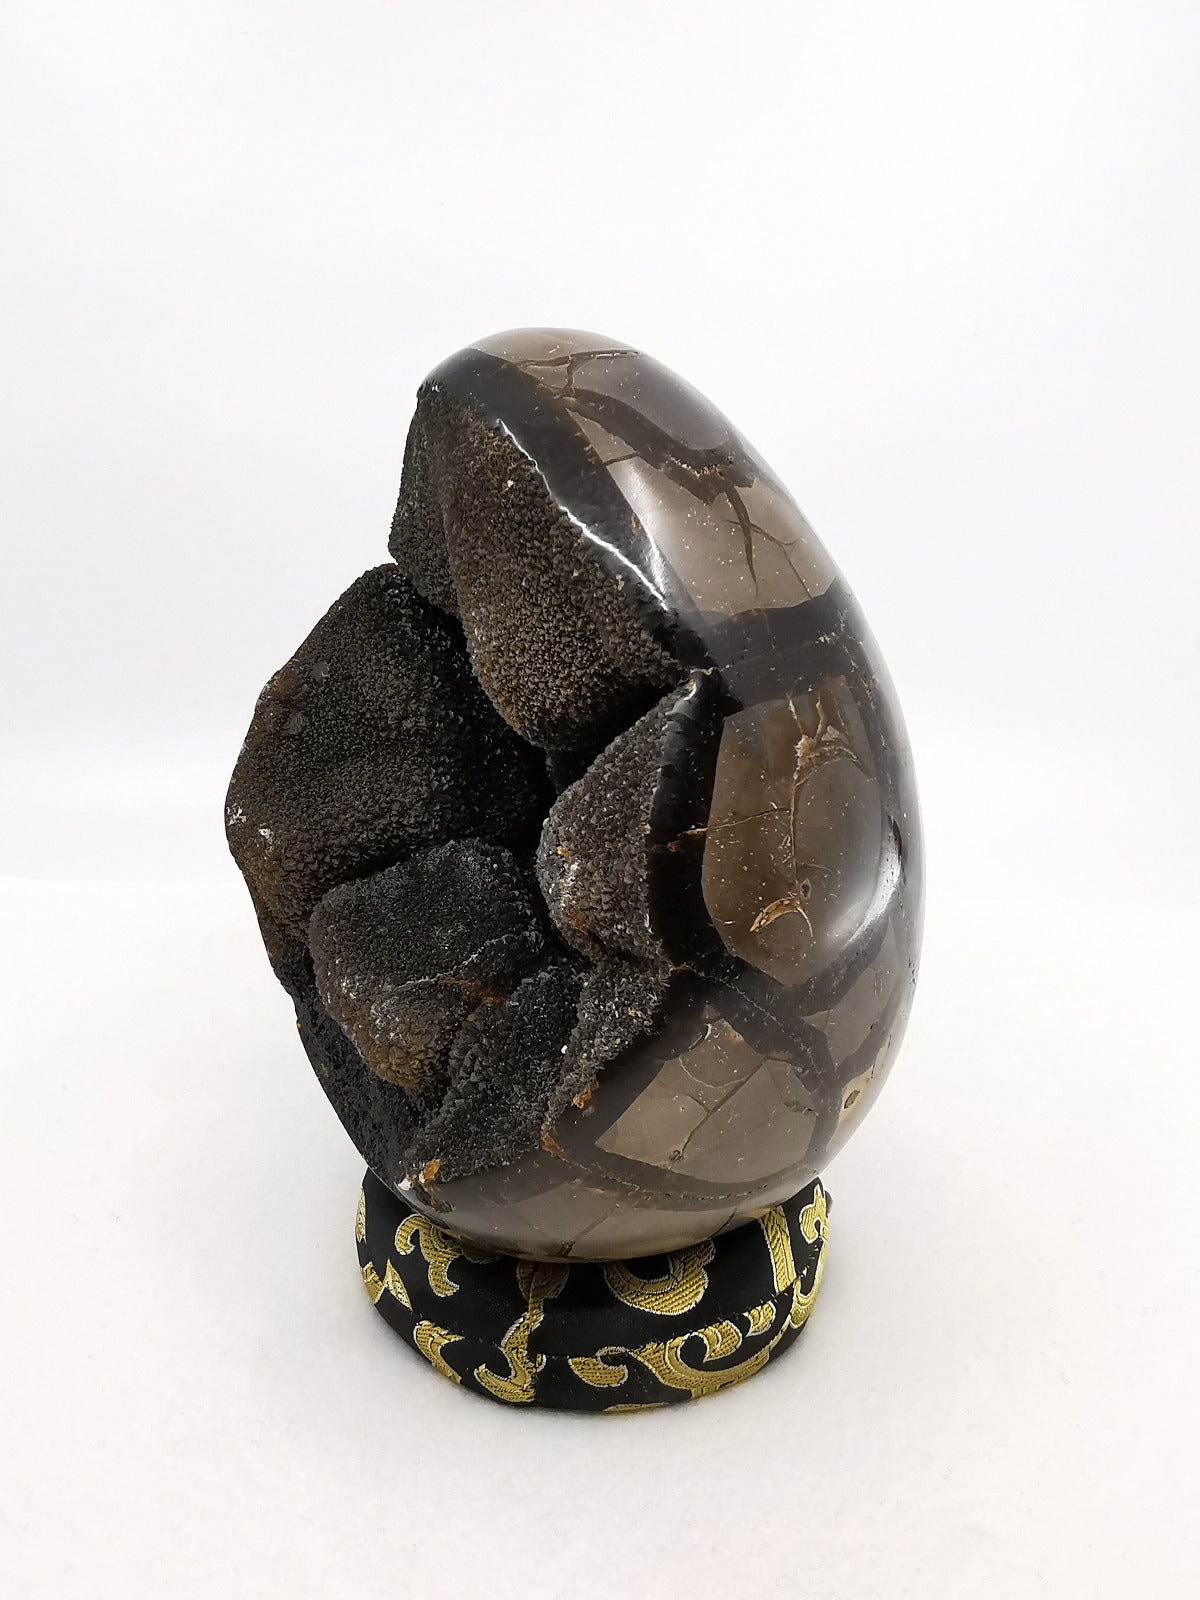 Septarian Geode Stone 4